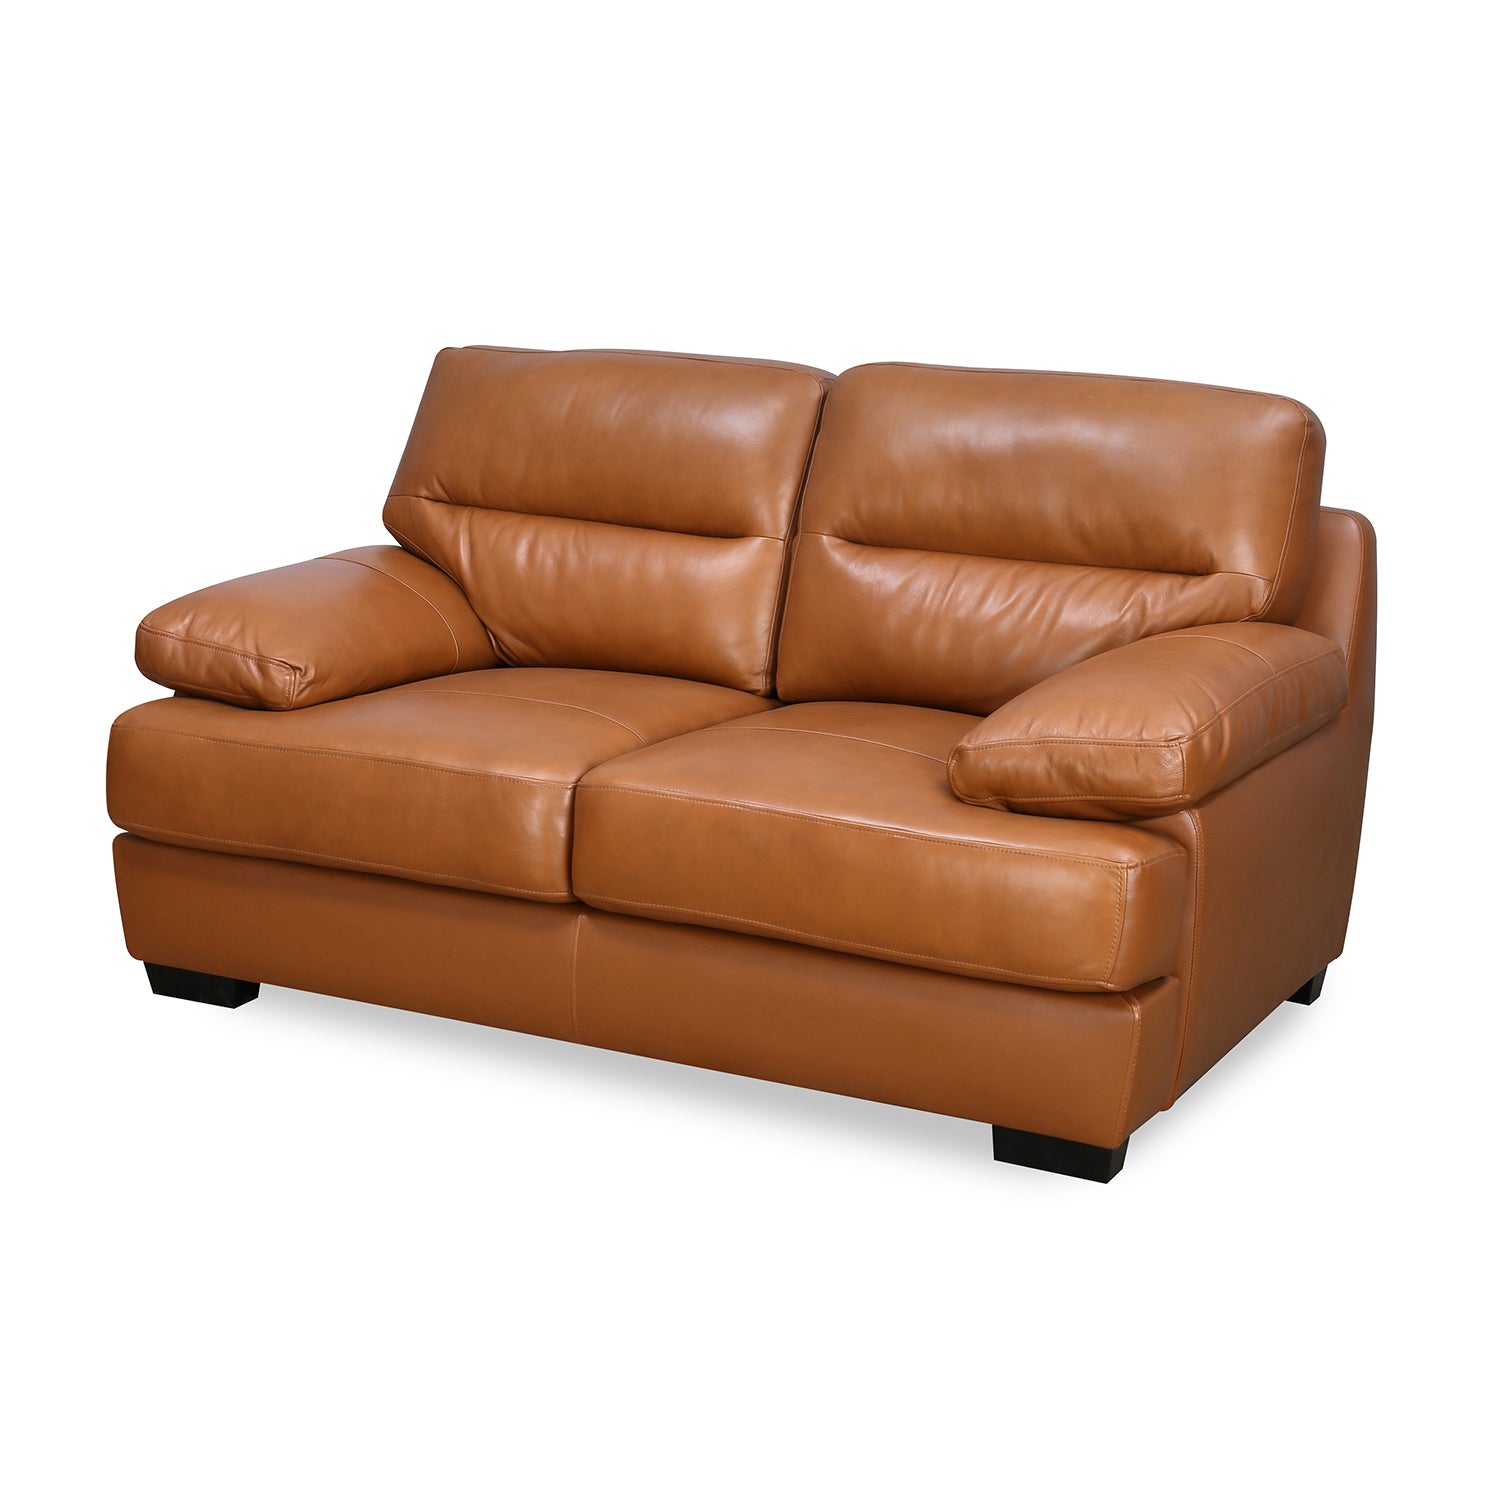 Henders 2 Seater Sofa (Tan)